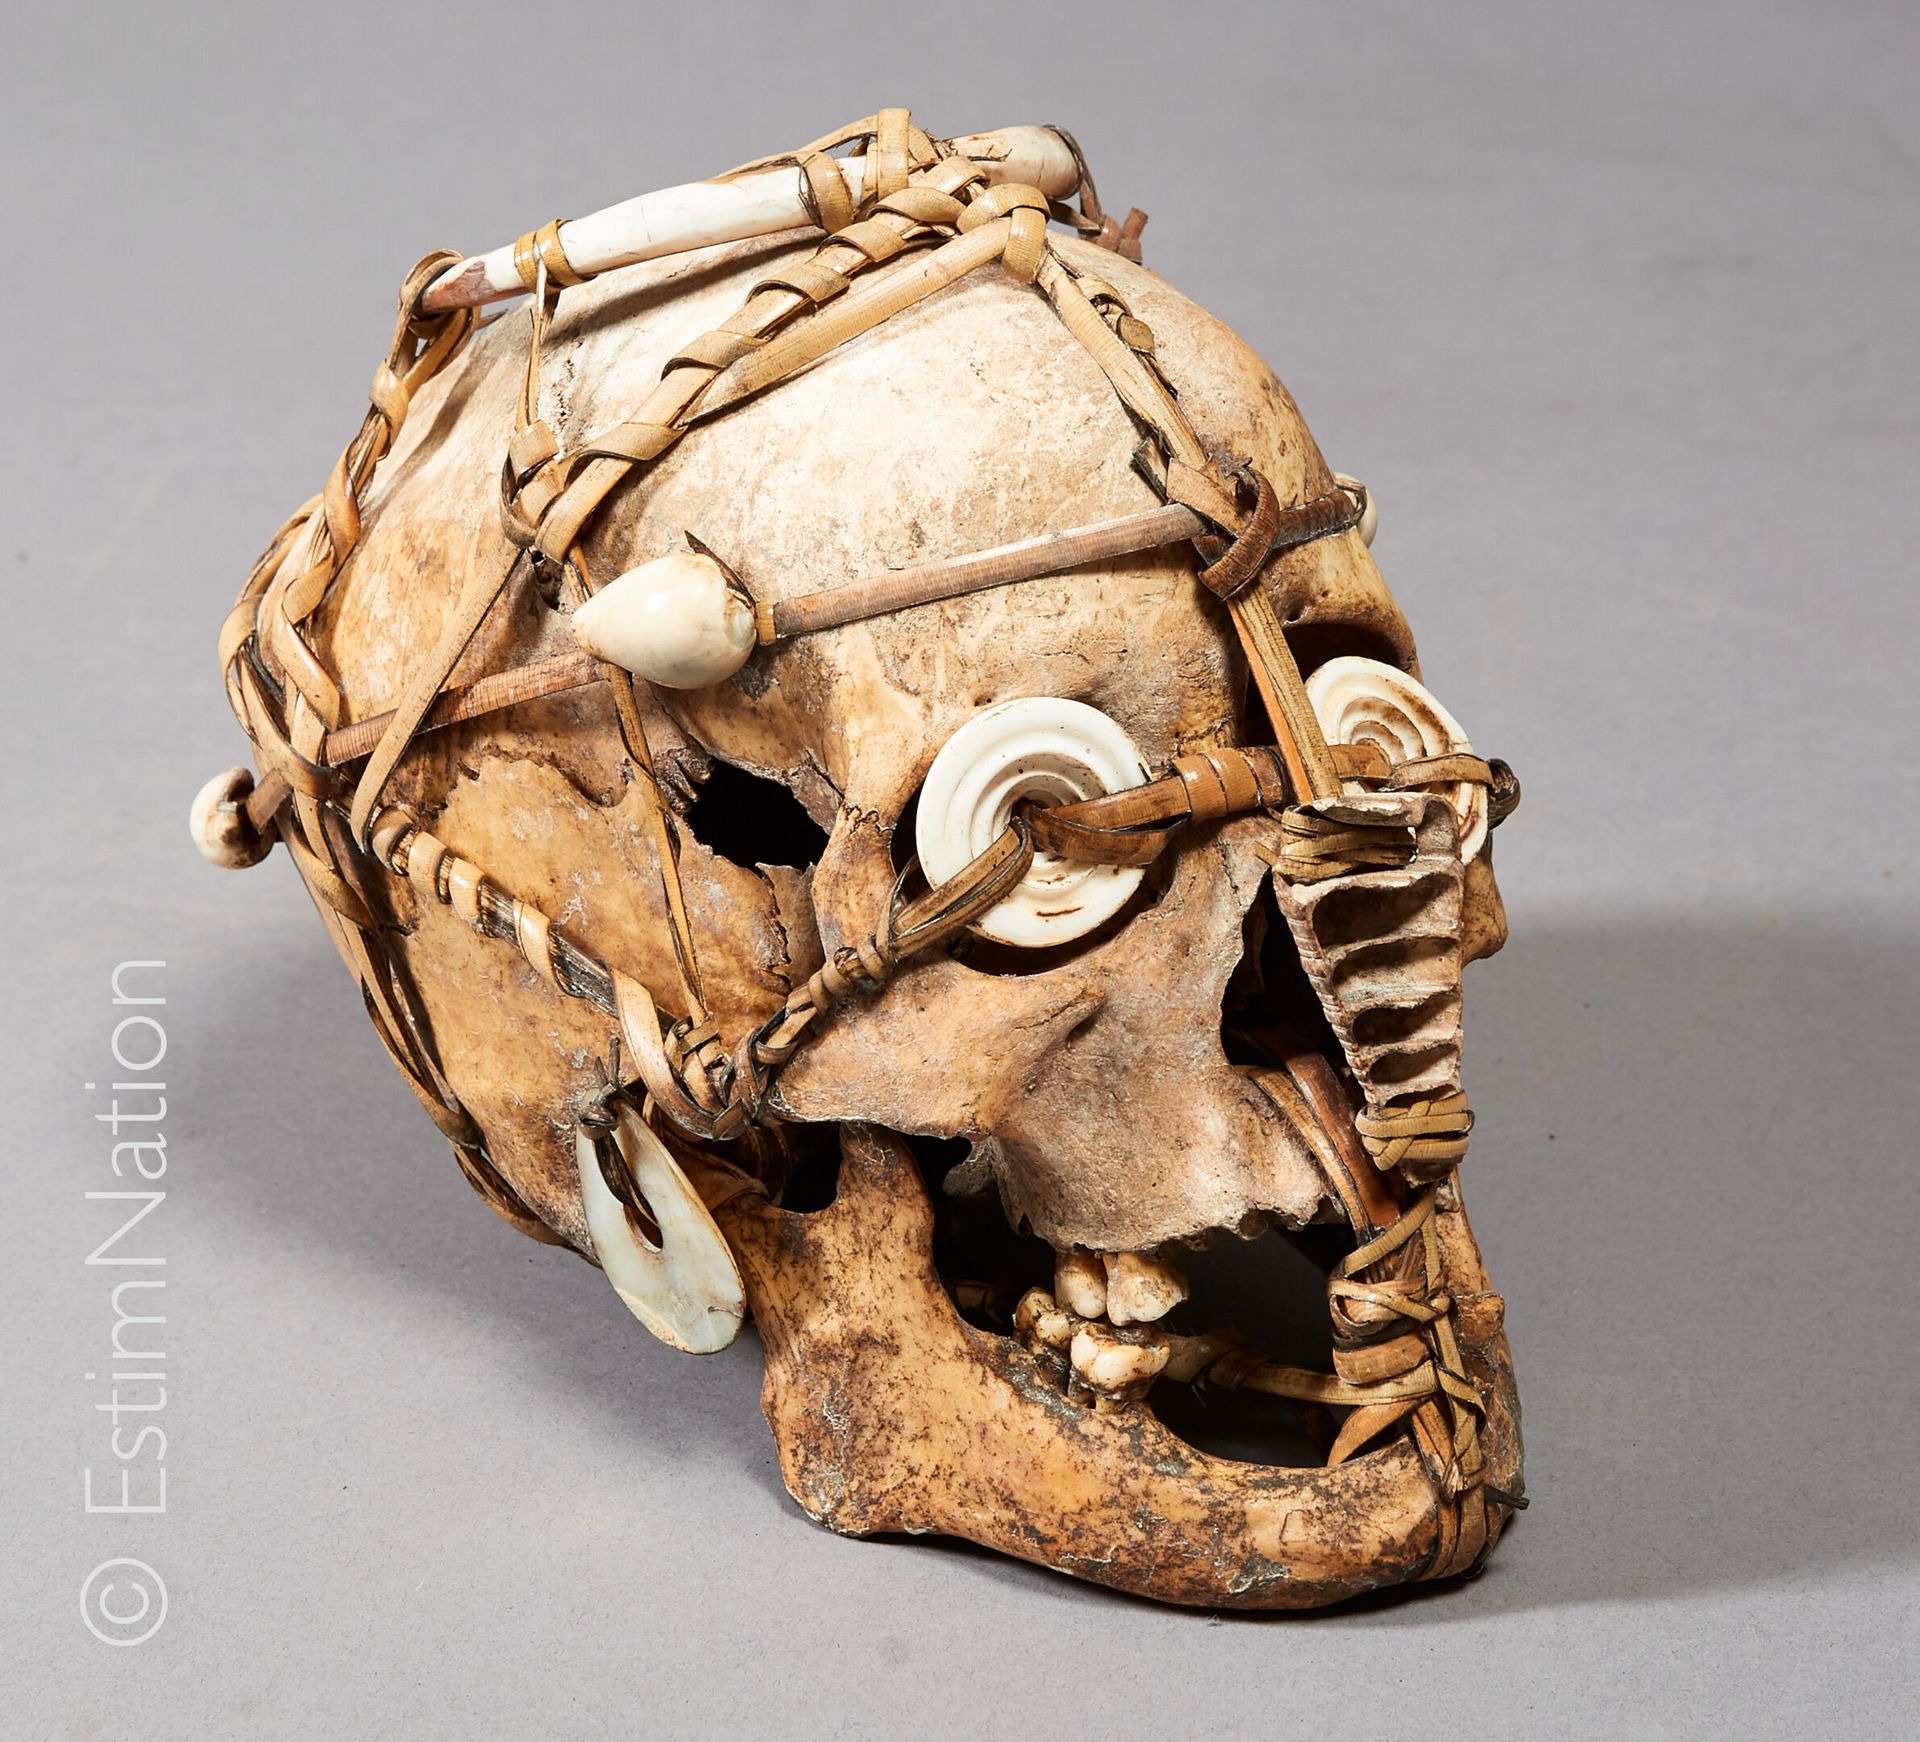 ARCHIPEL DES ÎLES SALOMON Archipiélago de las Islas SALOMÓN



Cráneo de antepas&hellip;